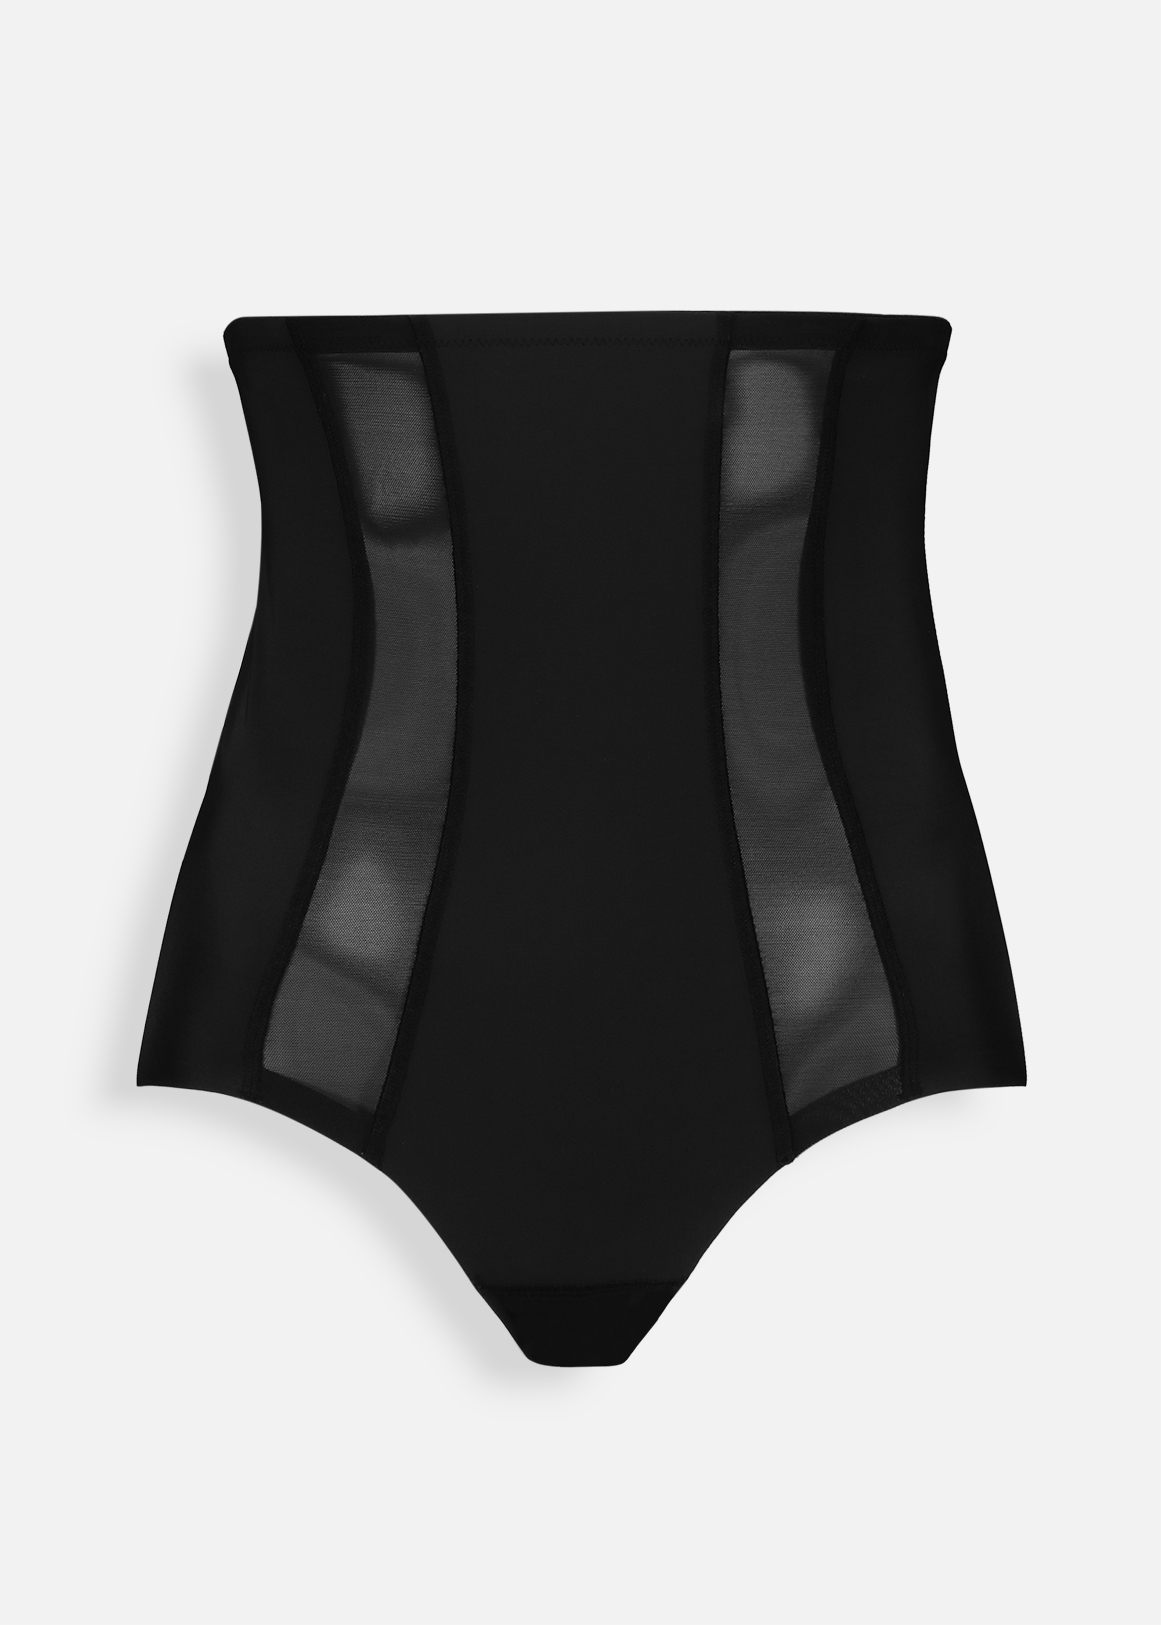 Lashevan All Mesh Underwear Prism Charcoal 100 (L) price in